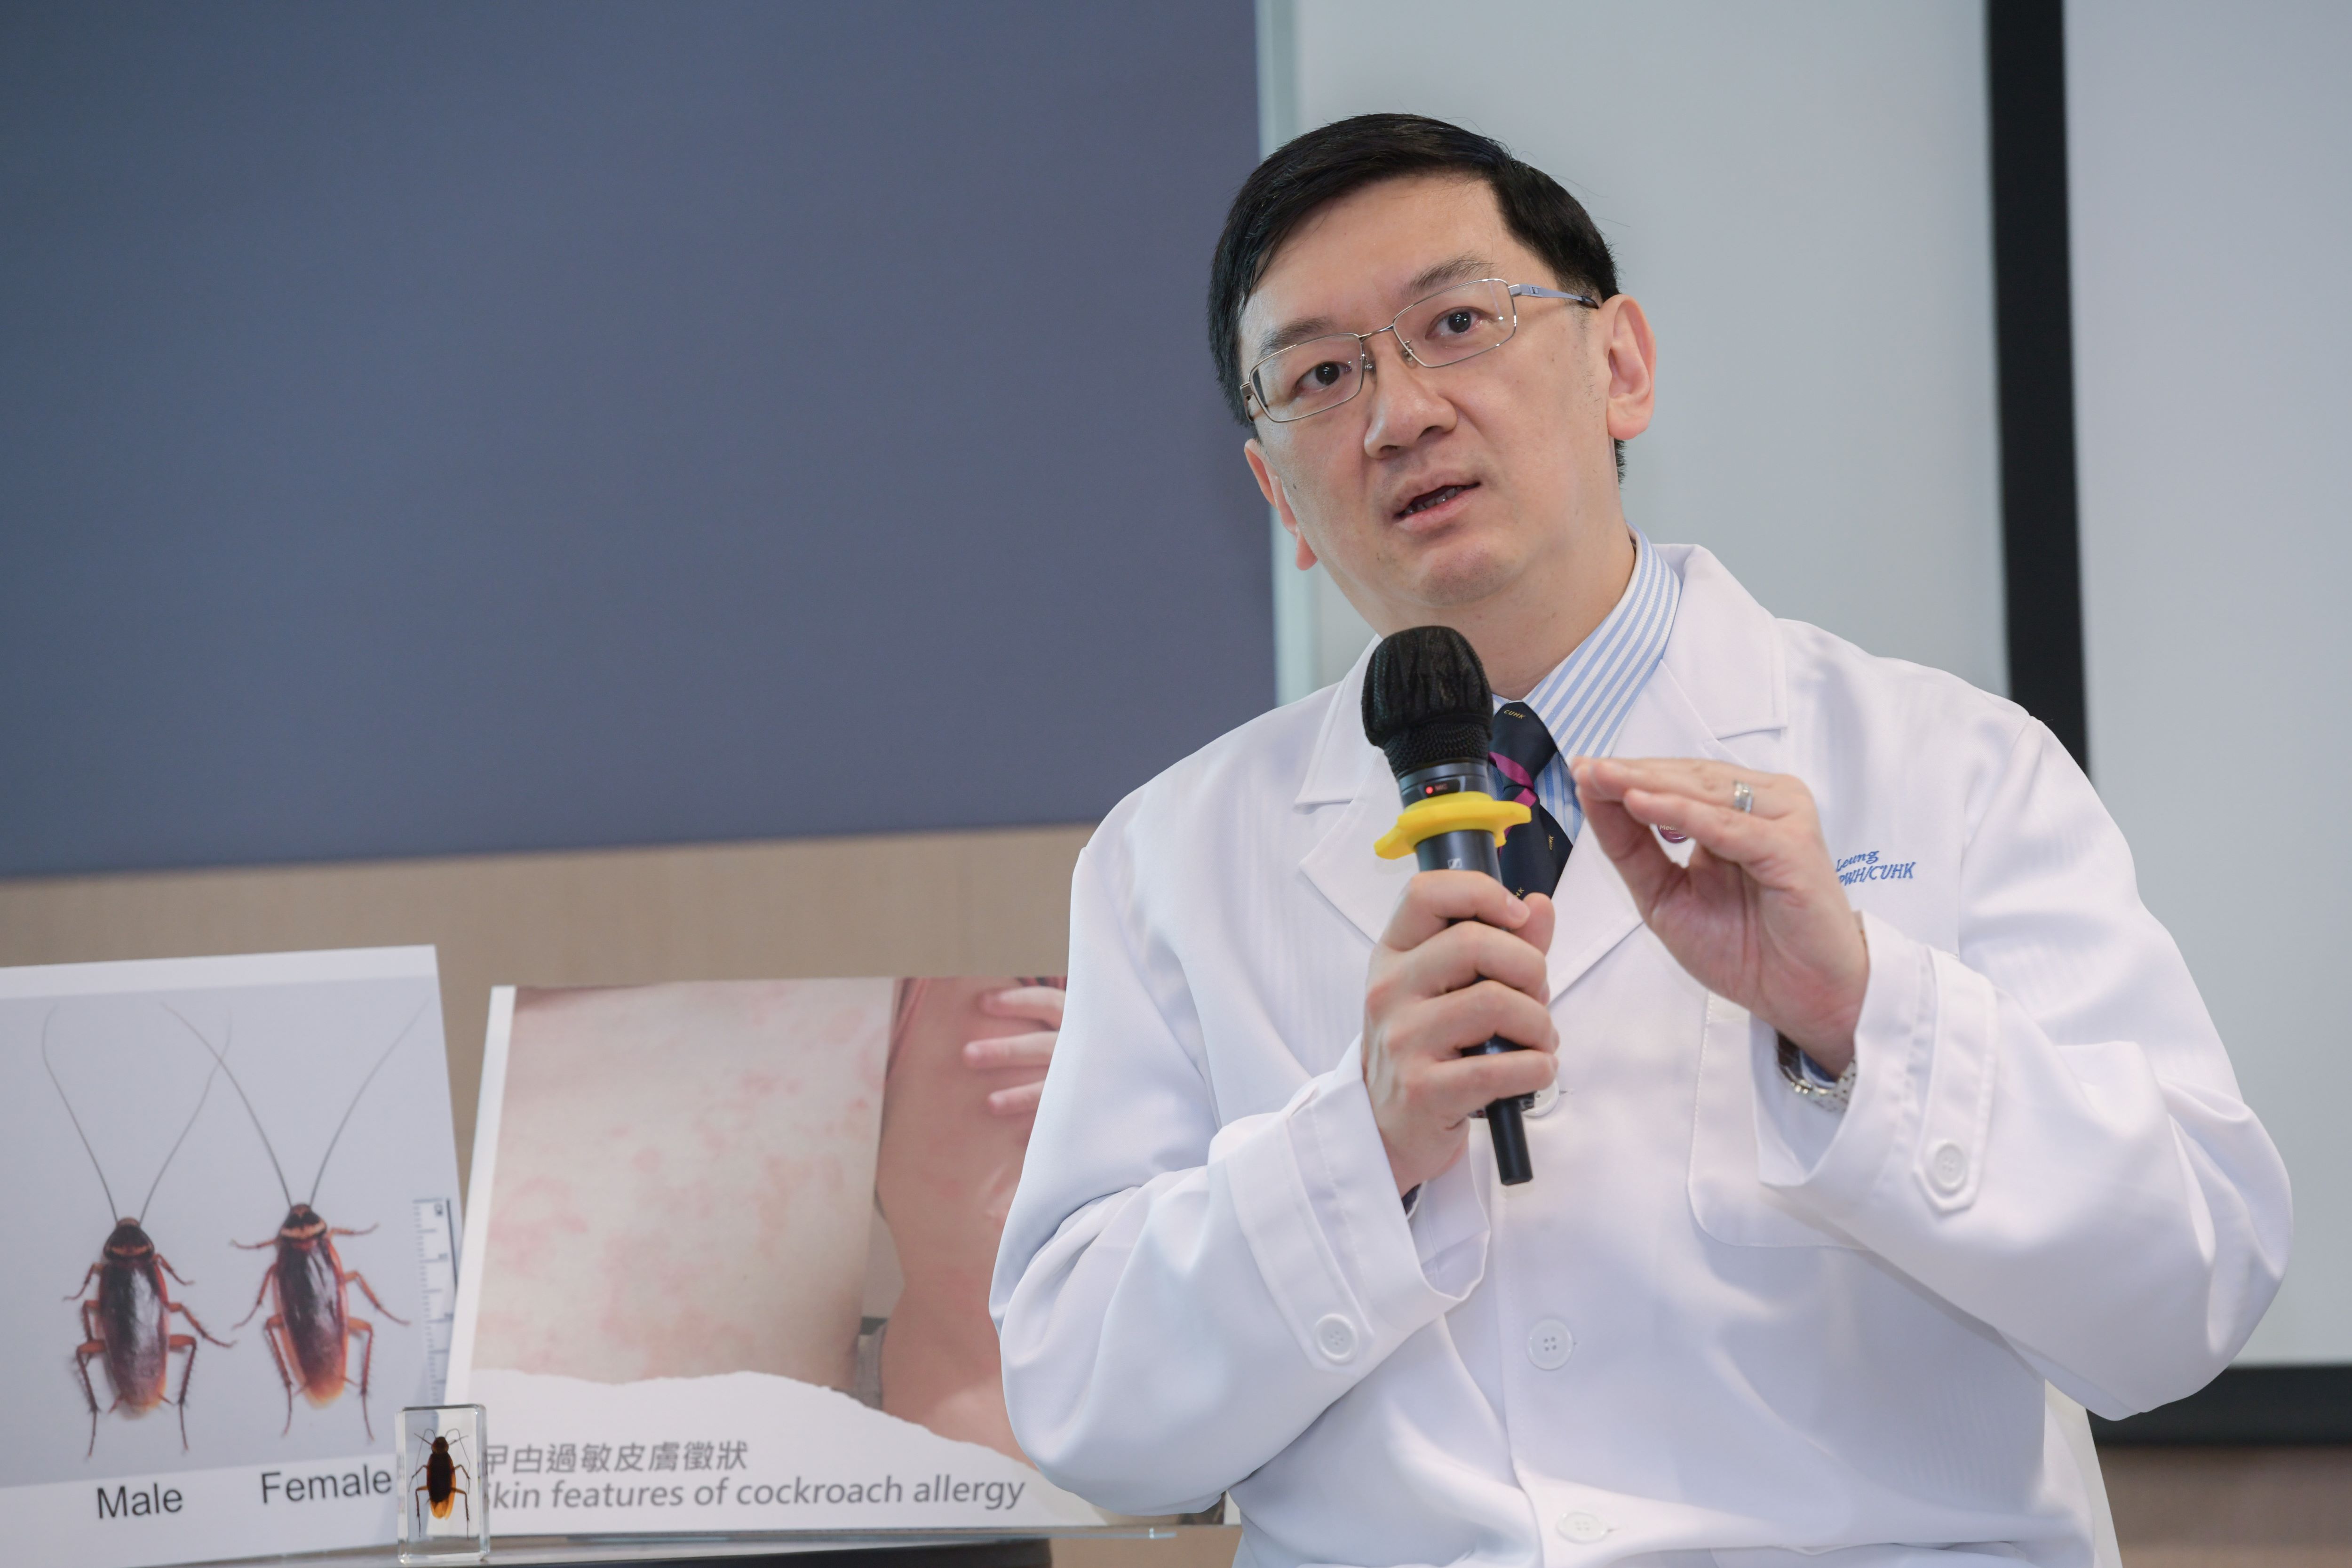 Professor Leung Ting Fan